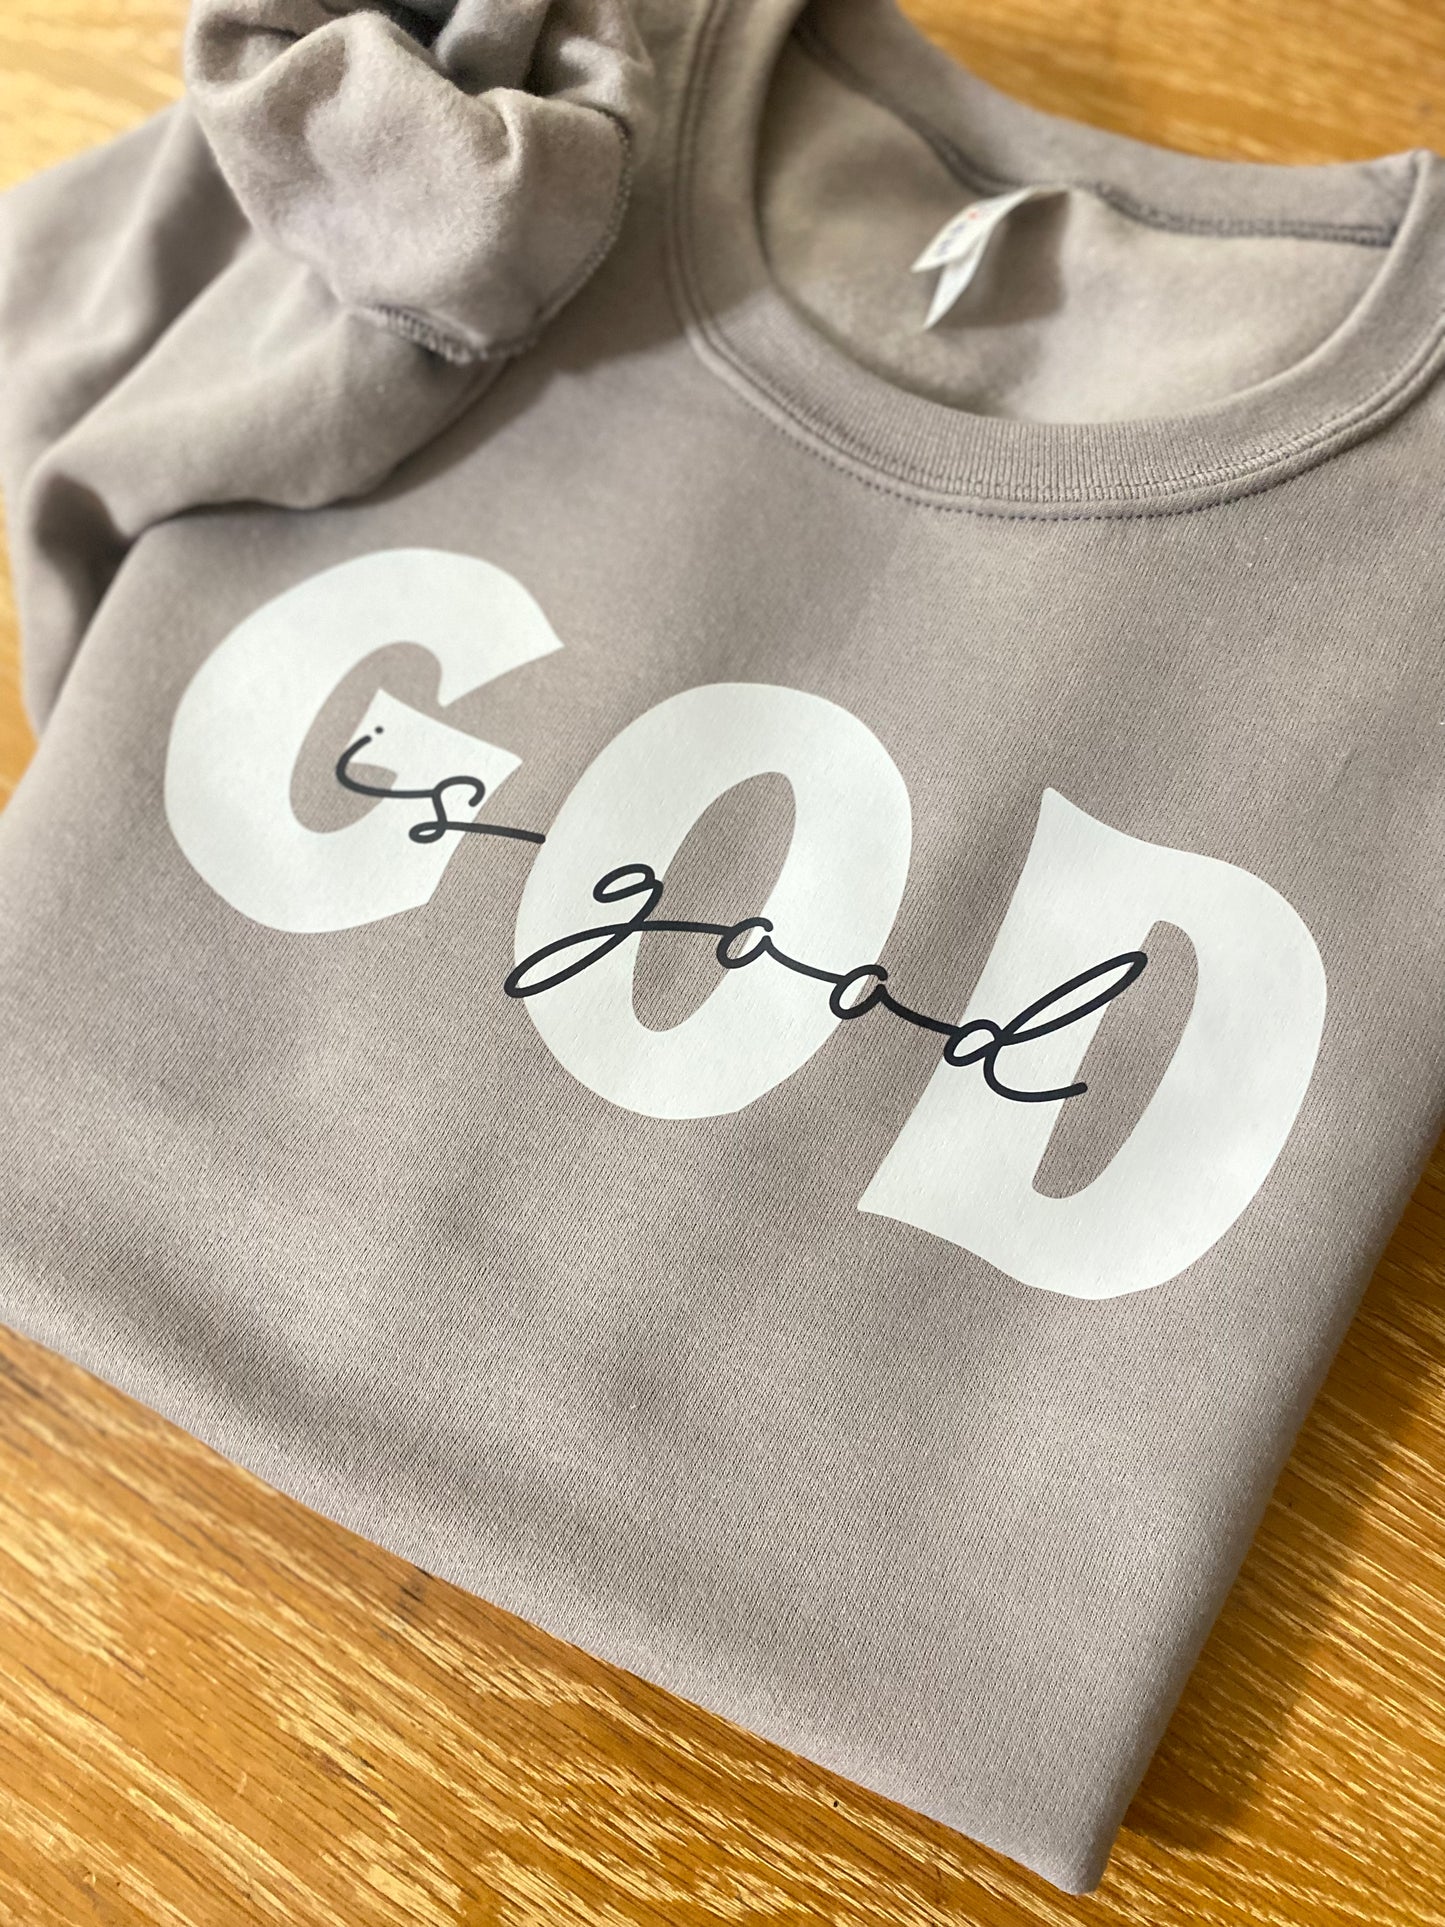 GOD is GOOD! Shirt